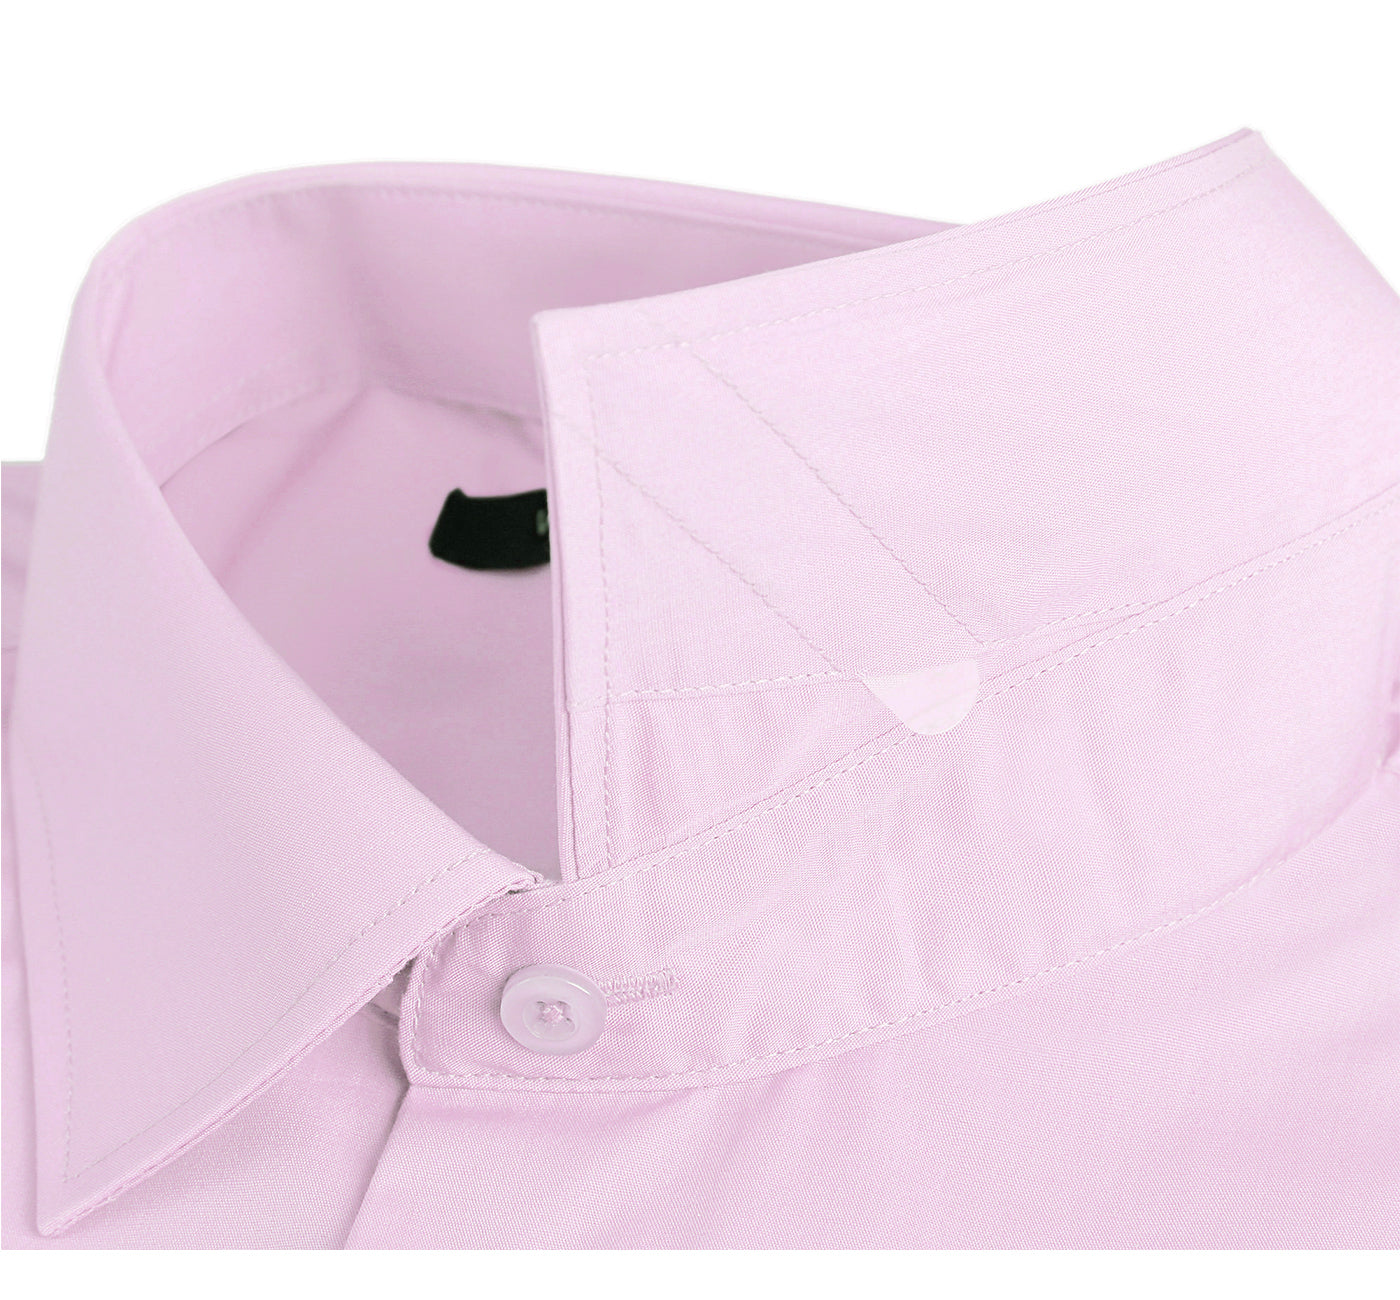 CS0222 Men's Classic Fit Long Sleeve Travel Easy-Care Cotton Light Pink Dress Shirt